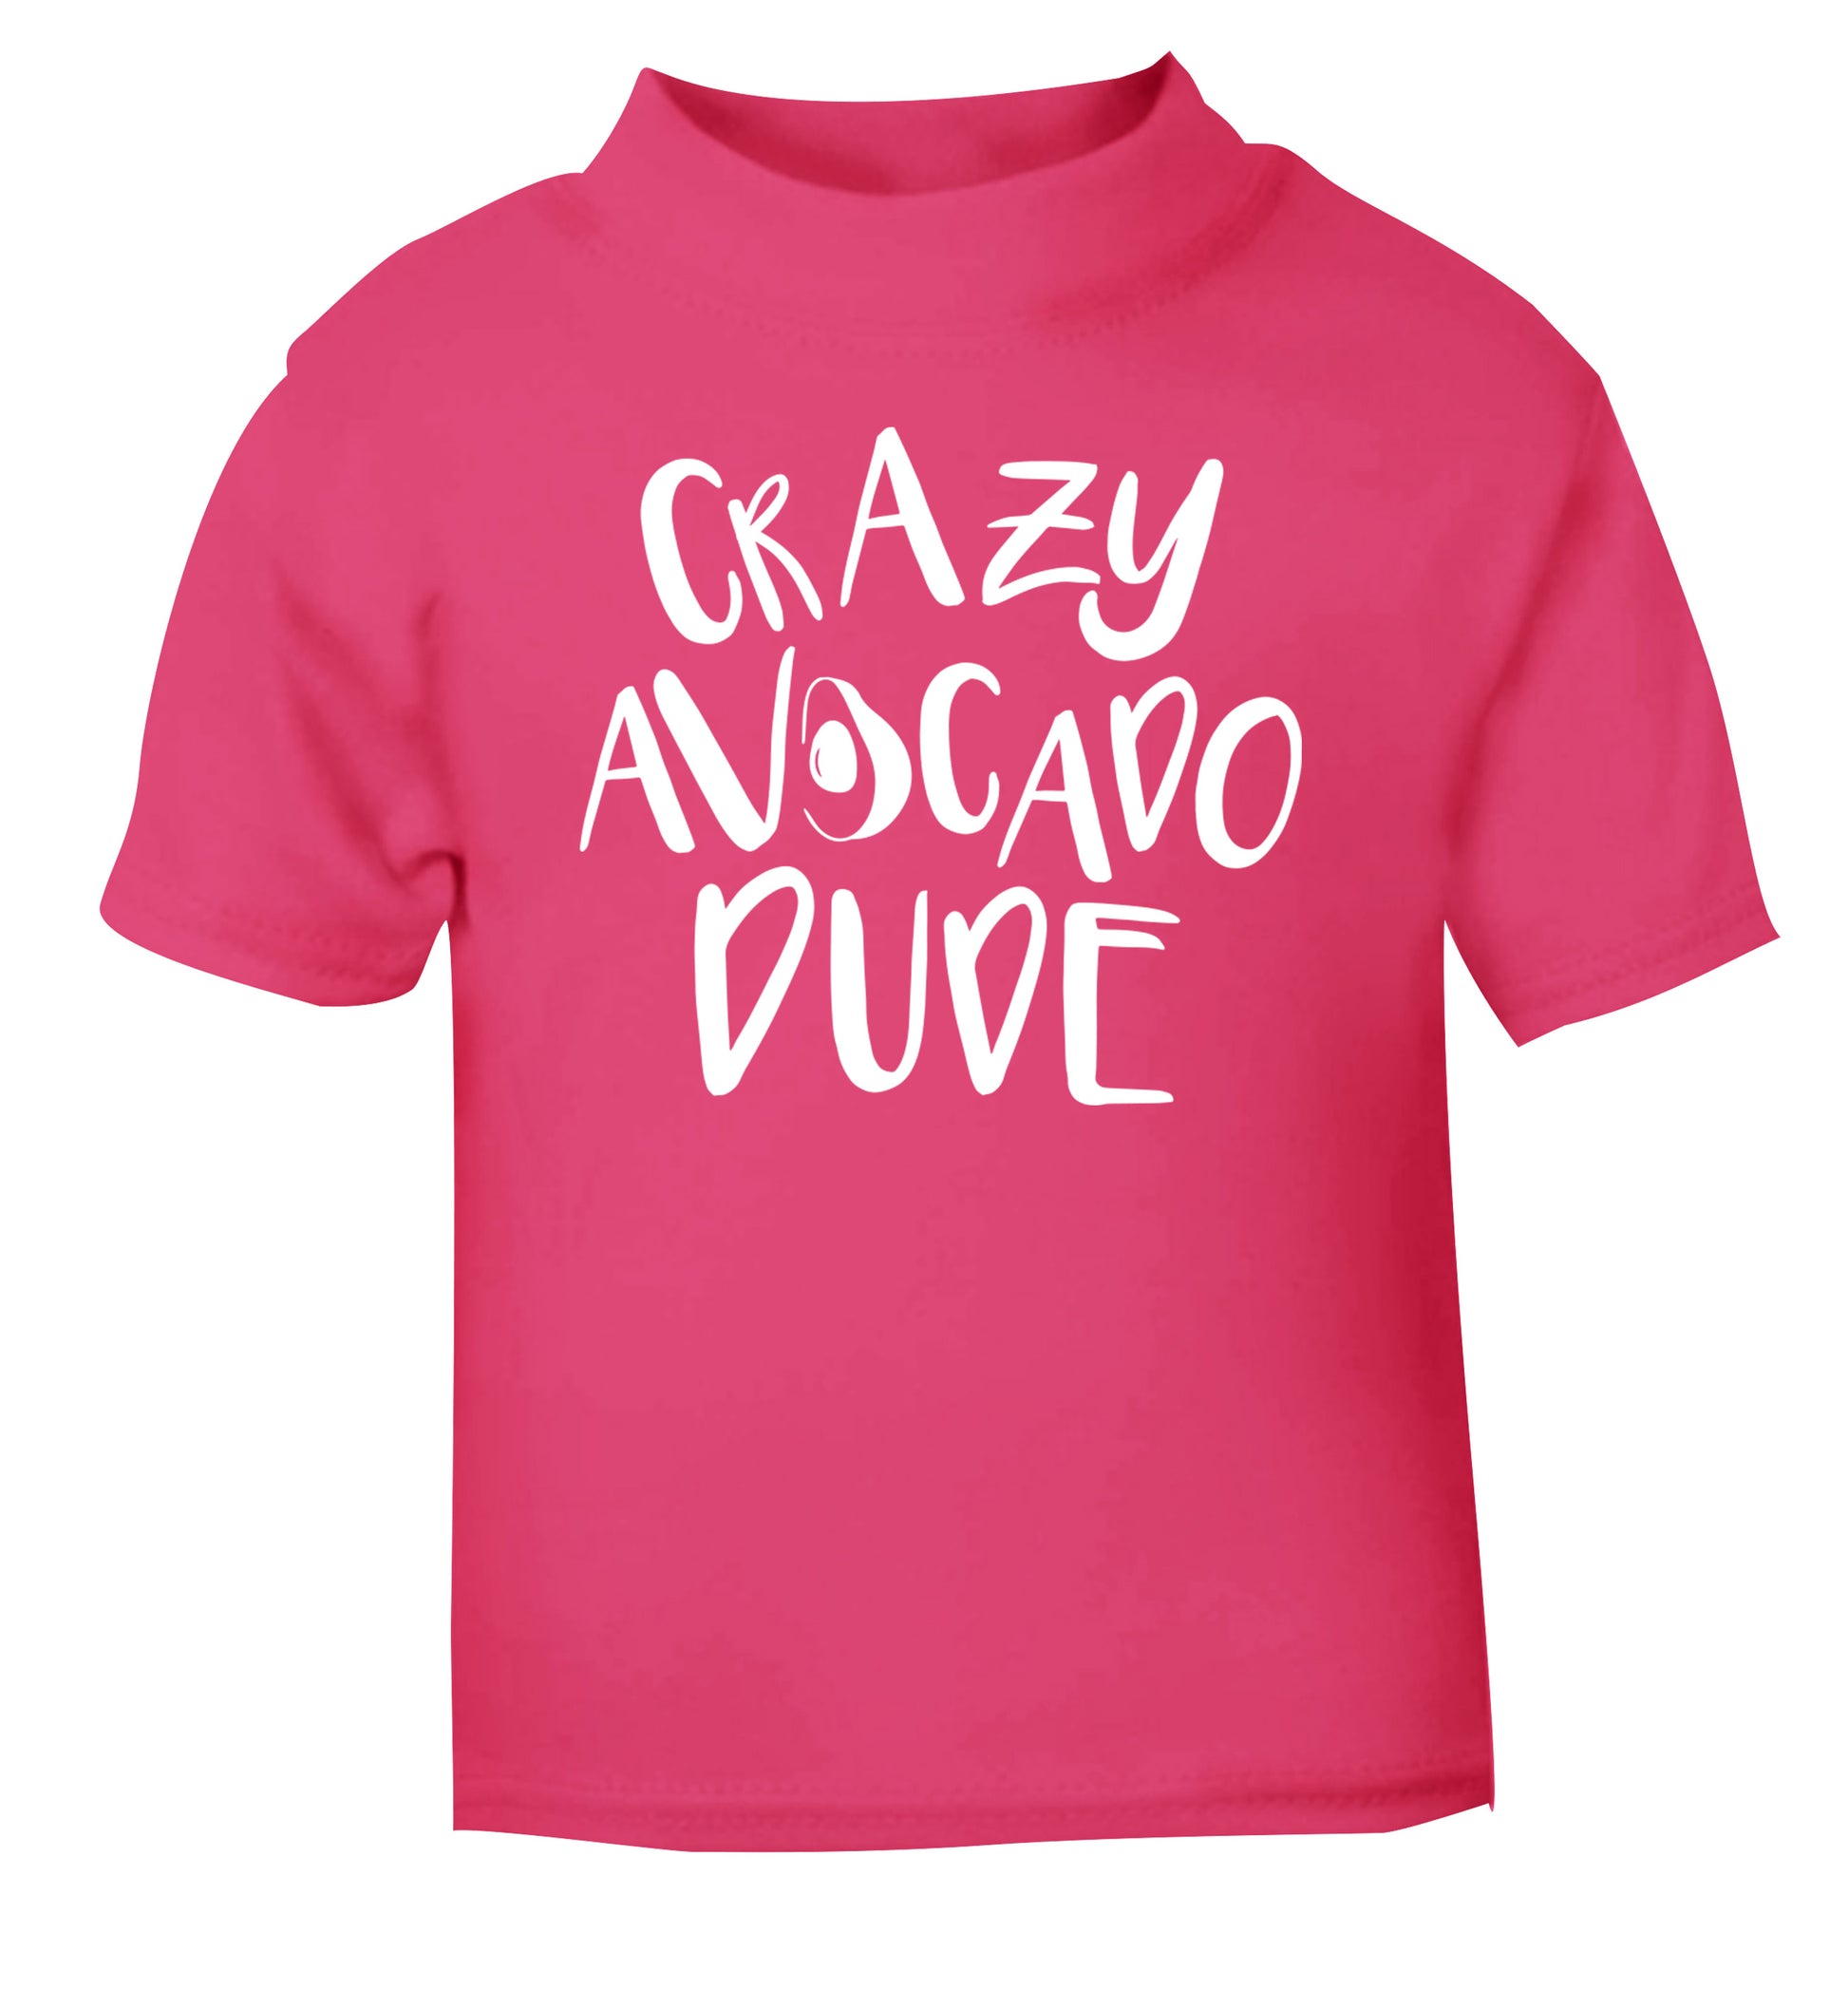 Crazy avocado dude pink Baby Toddler Tshirt 2 Years